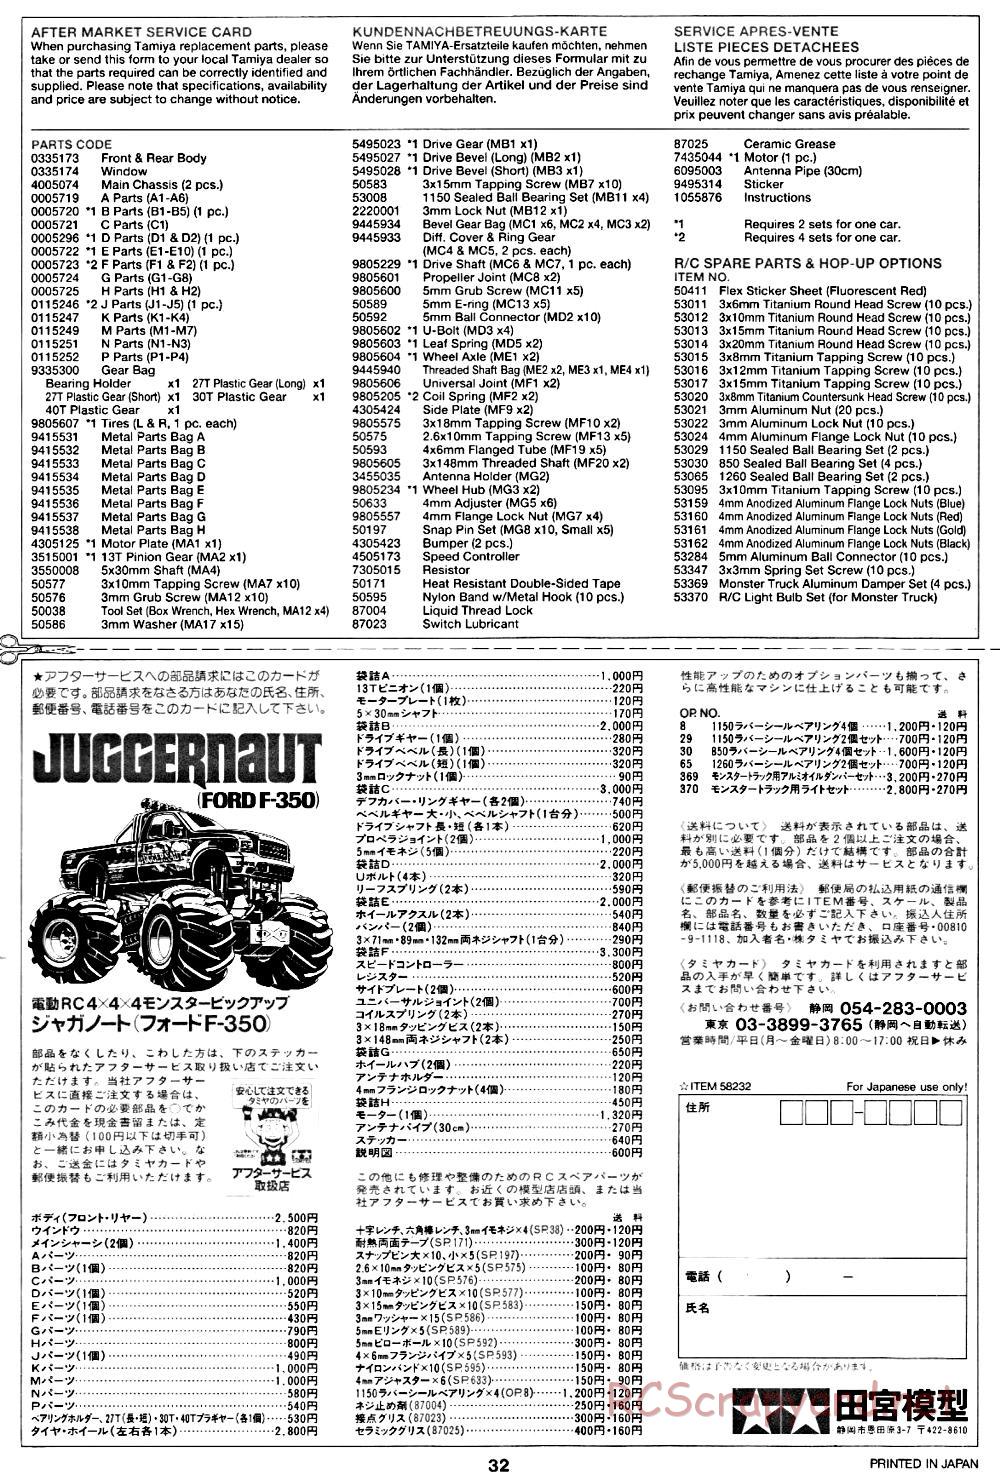 Tamiya - Juggernaut Chassis - Manual - Page 32